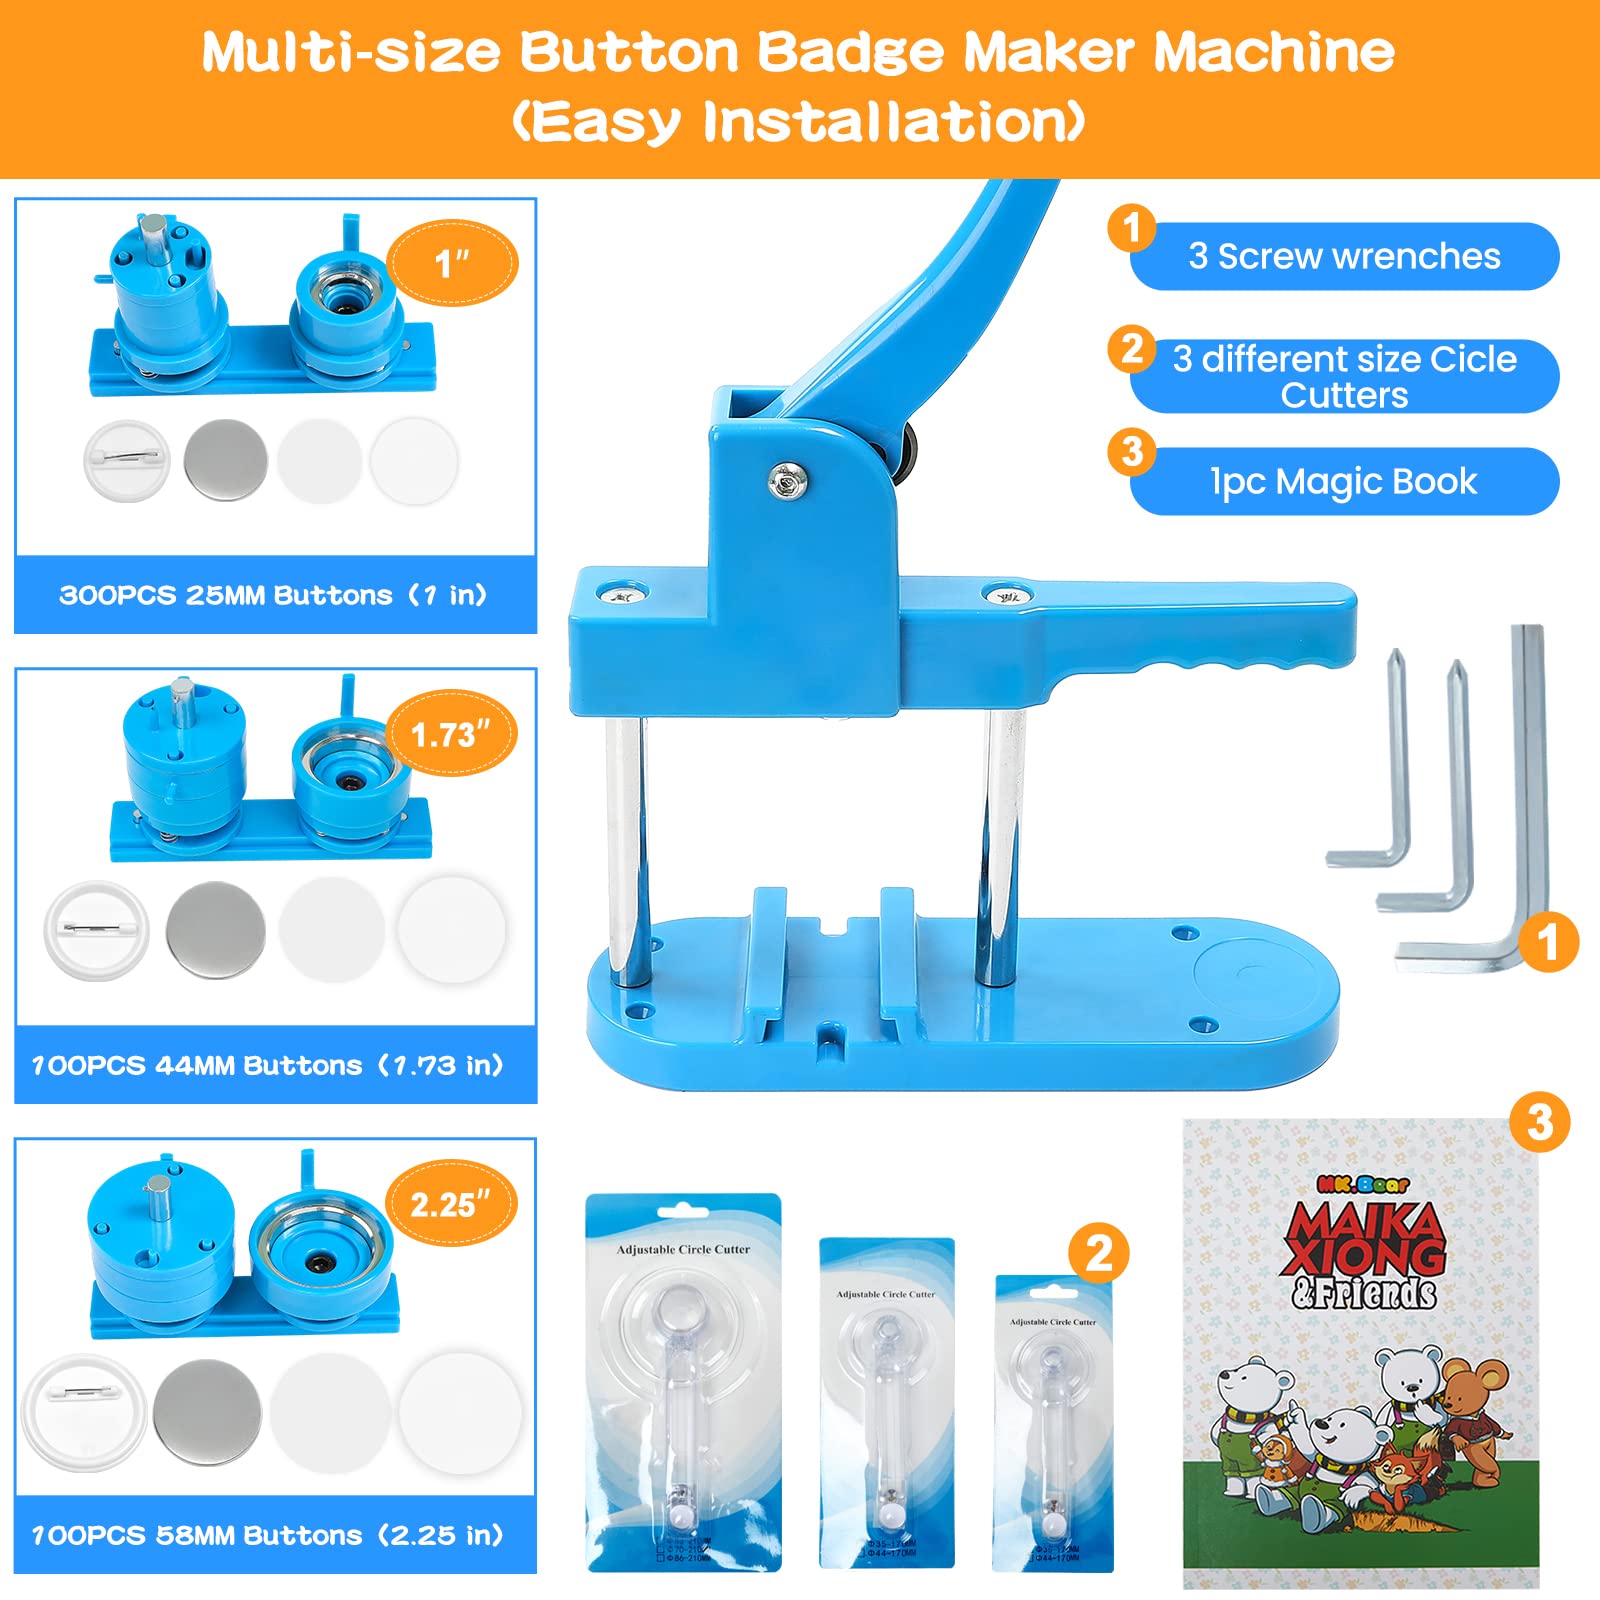 Alldeer Button Maker Machine Multiple Sizes, 1+1.73+2.25 inch Button Maker with 500 Sets Button Making Supplies for Kids, Magic Book, Cutter Machine